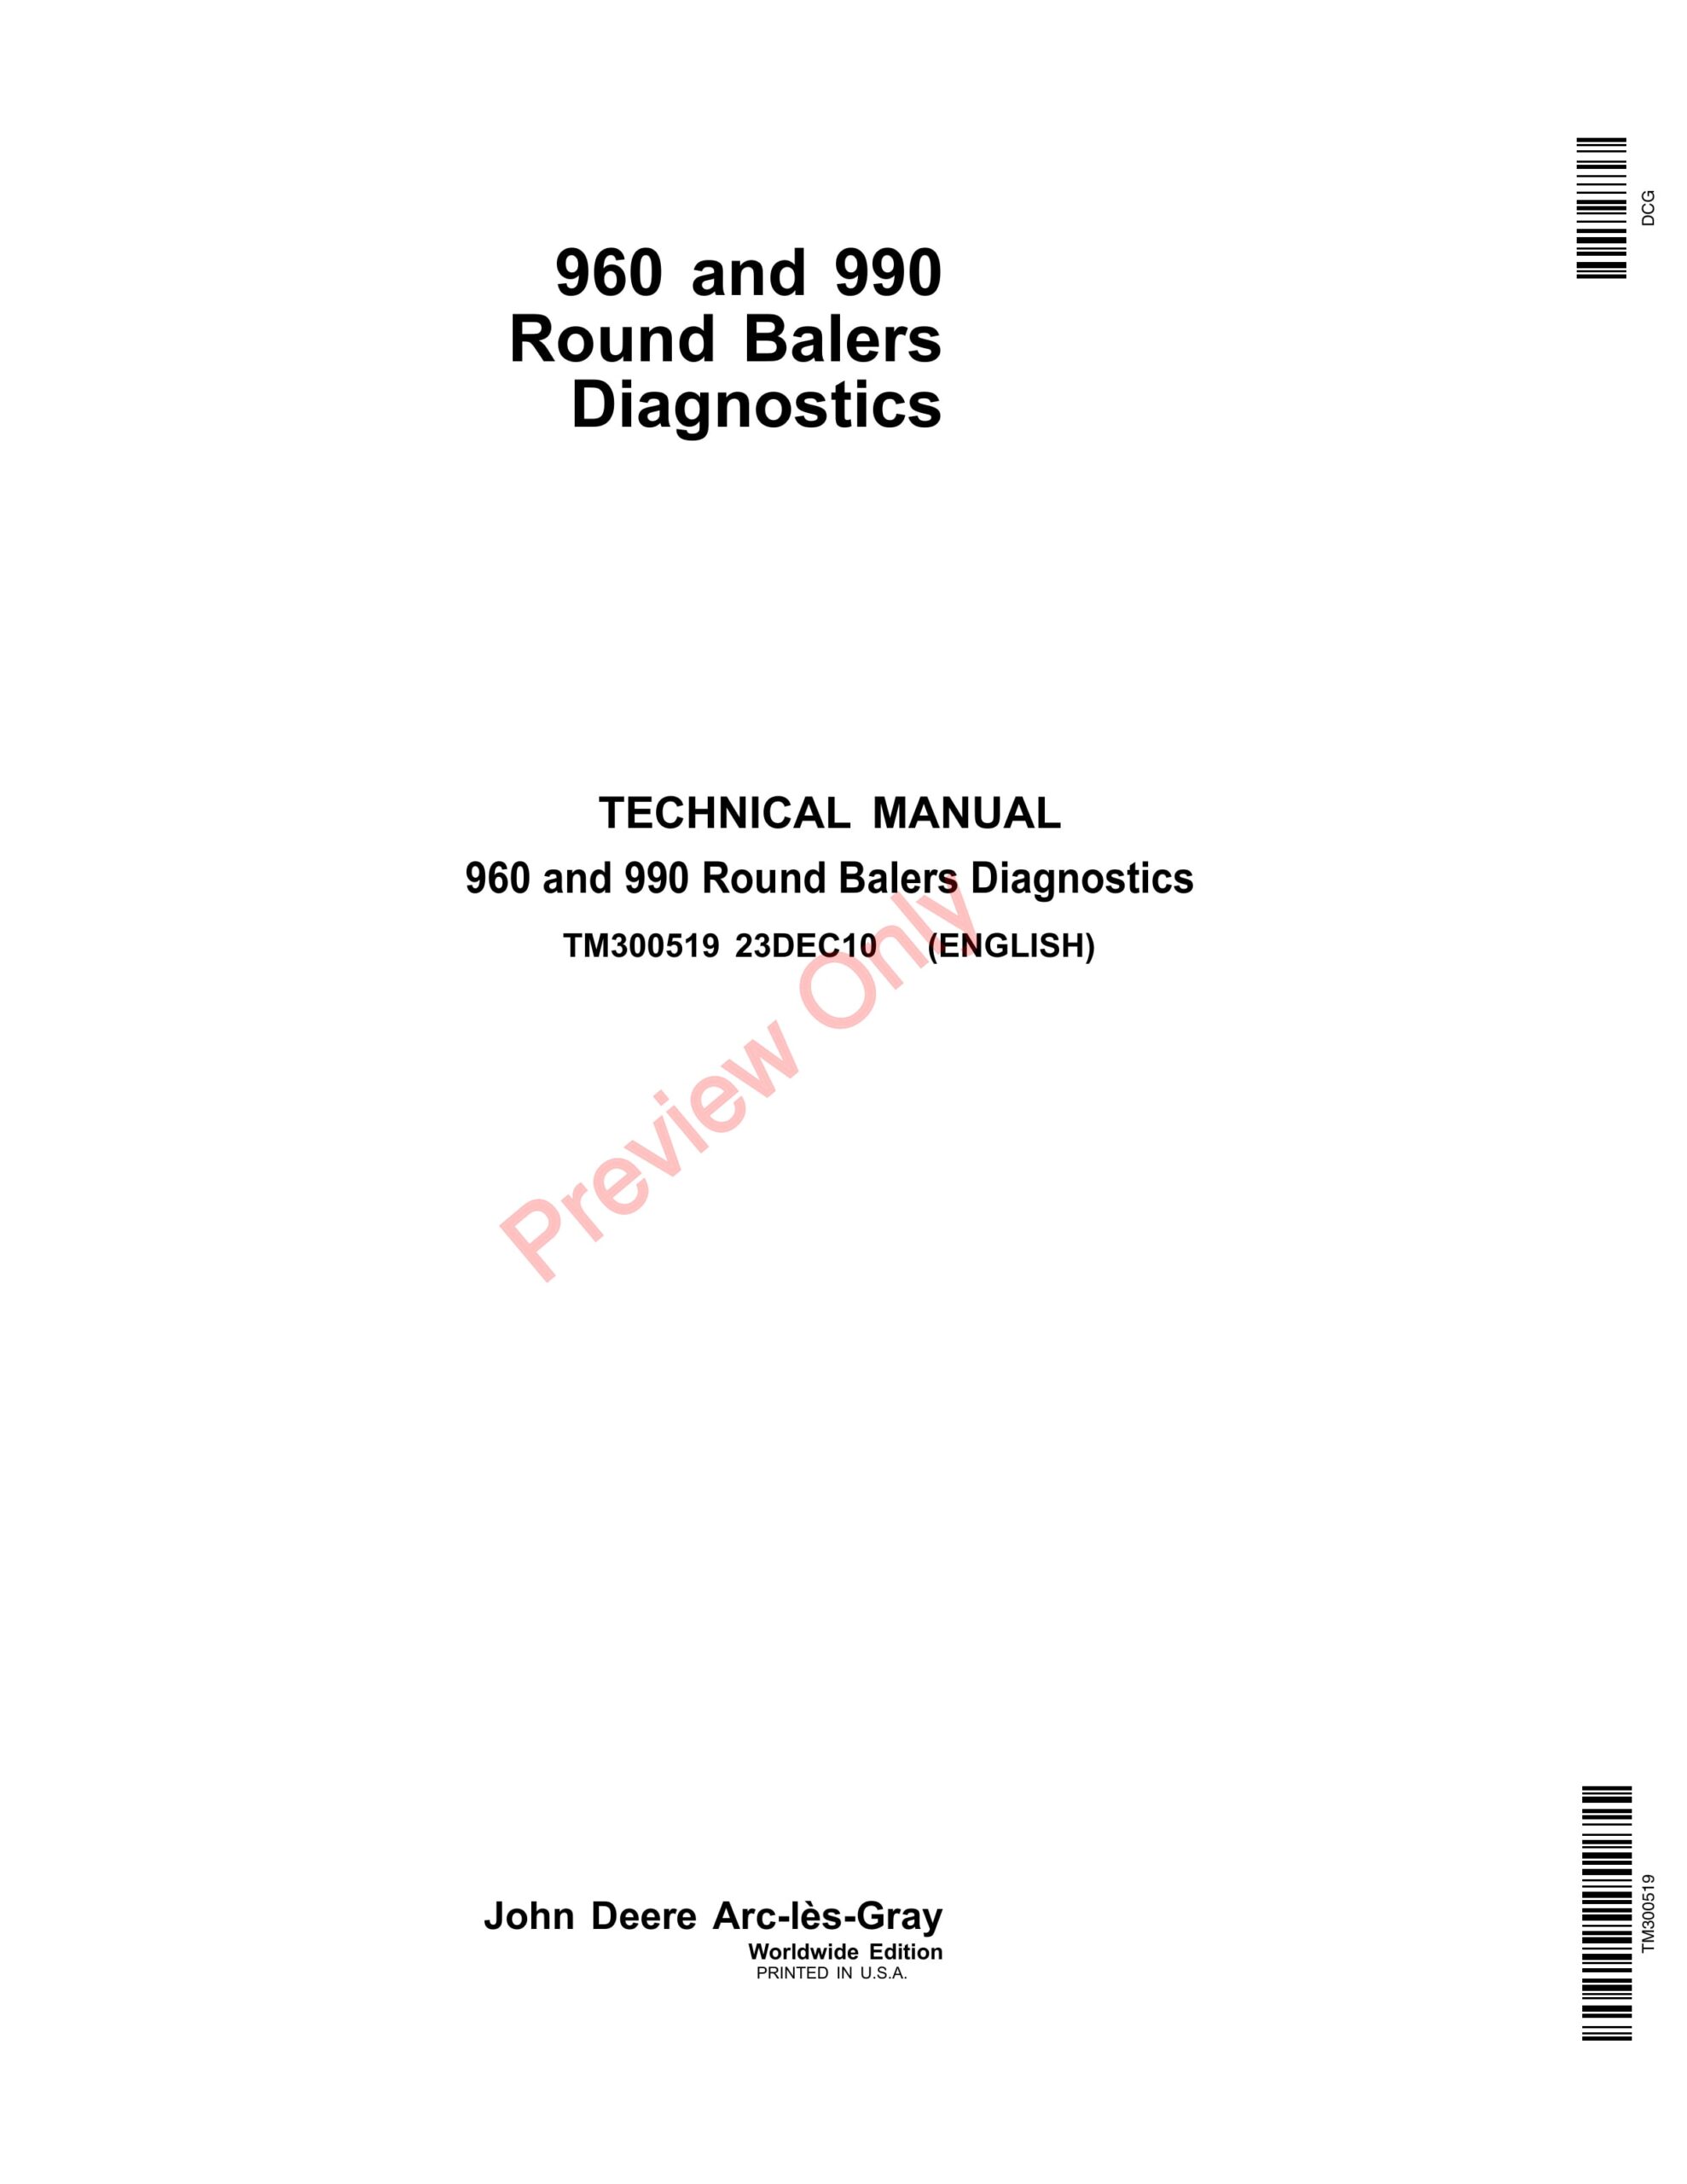 John Deere 960 and 990 Round Balerss Technical Manual TM300519 23DEC10-1